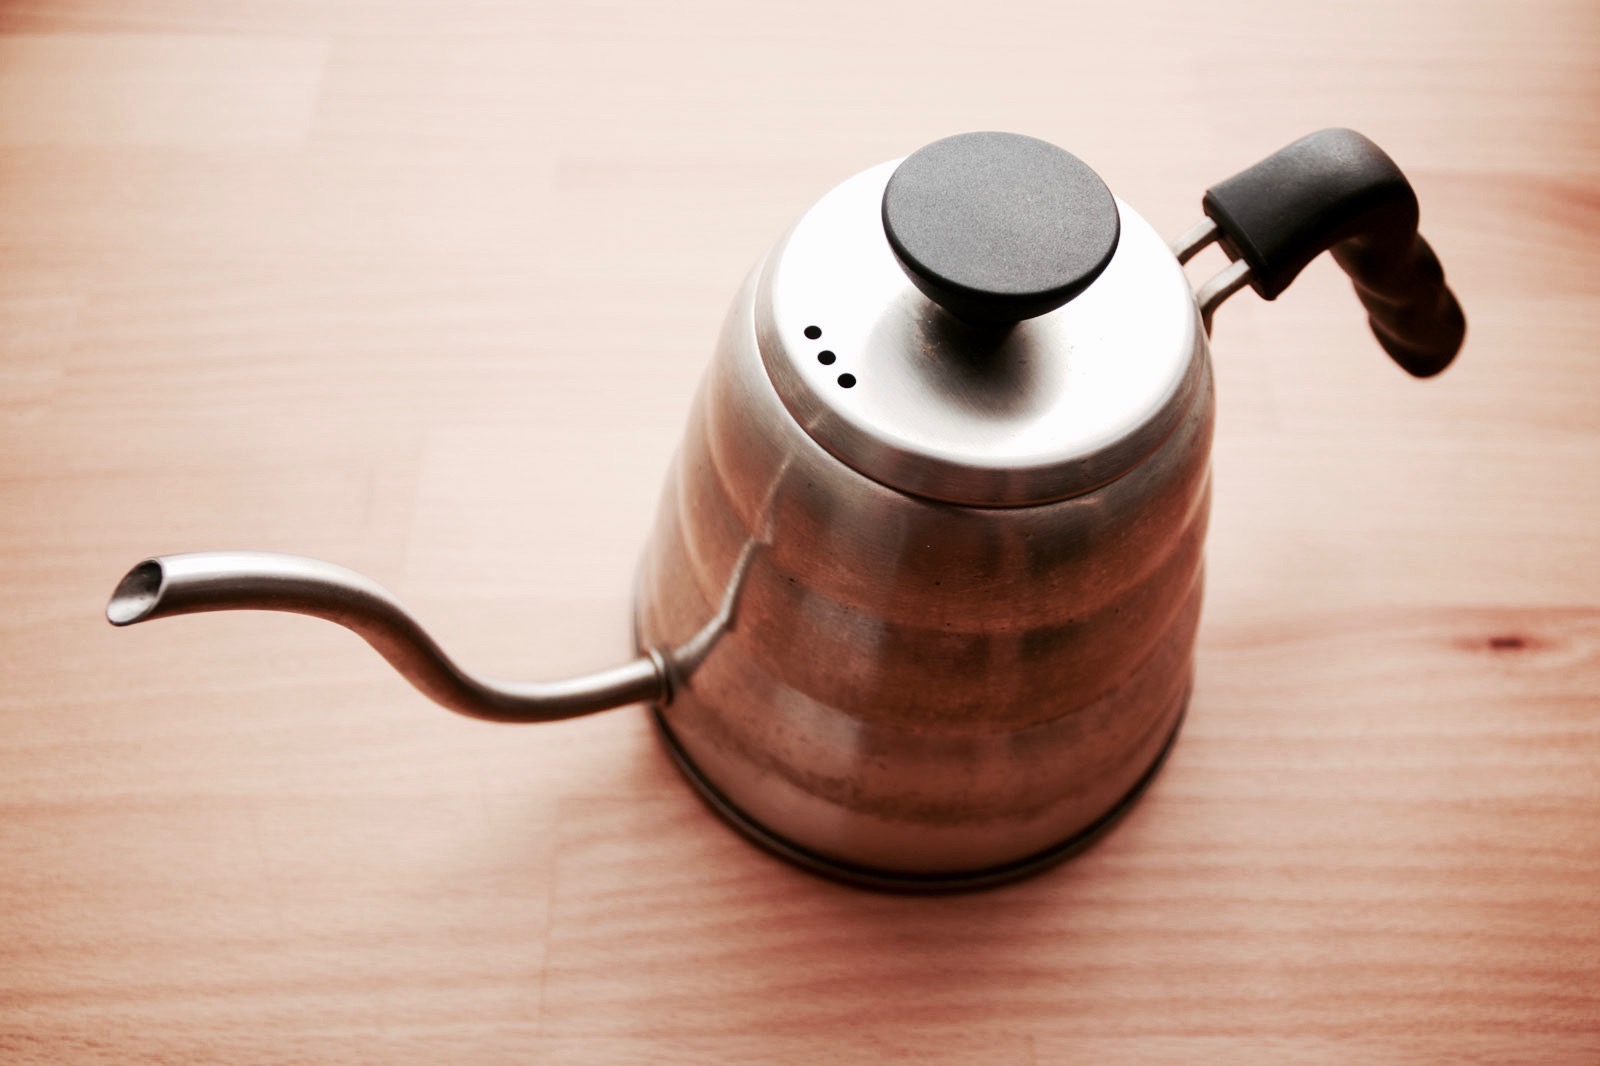 A gooseneck coffee kettle